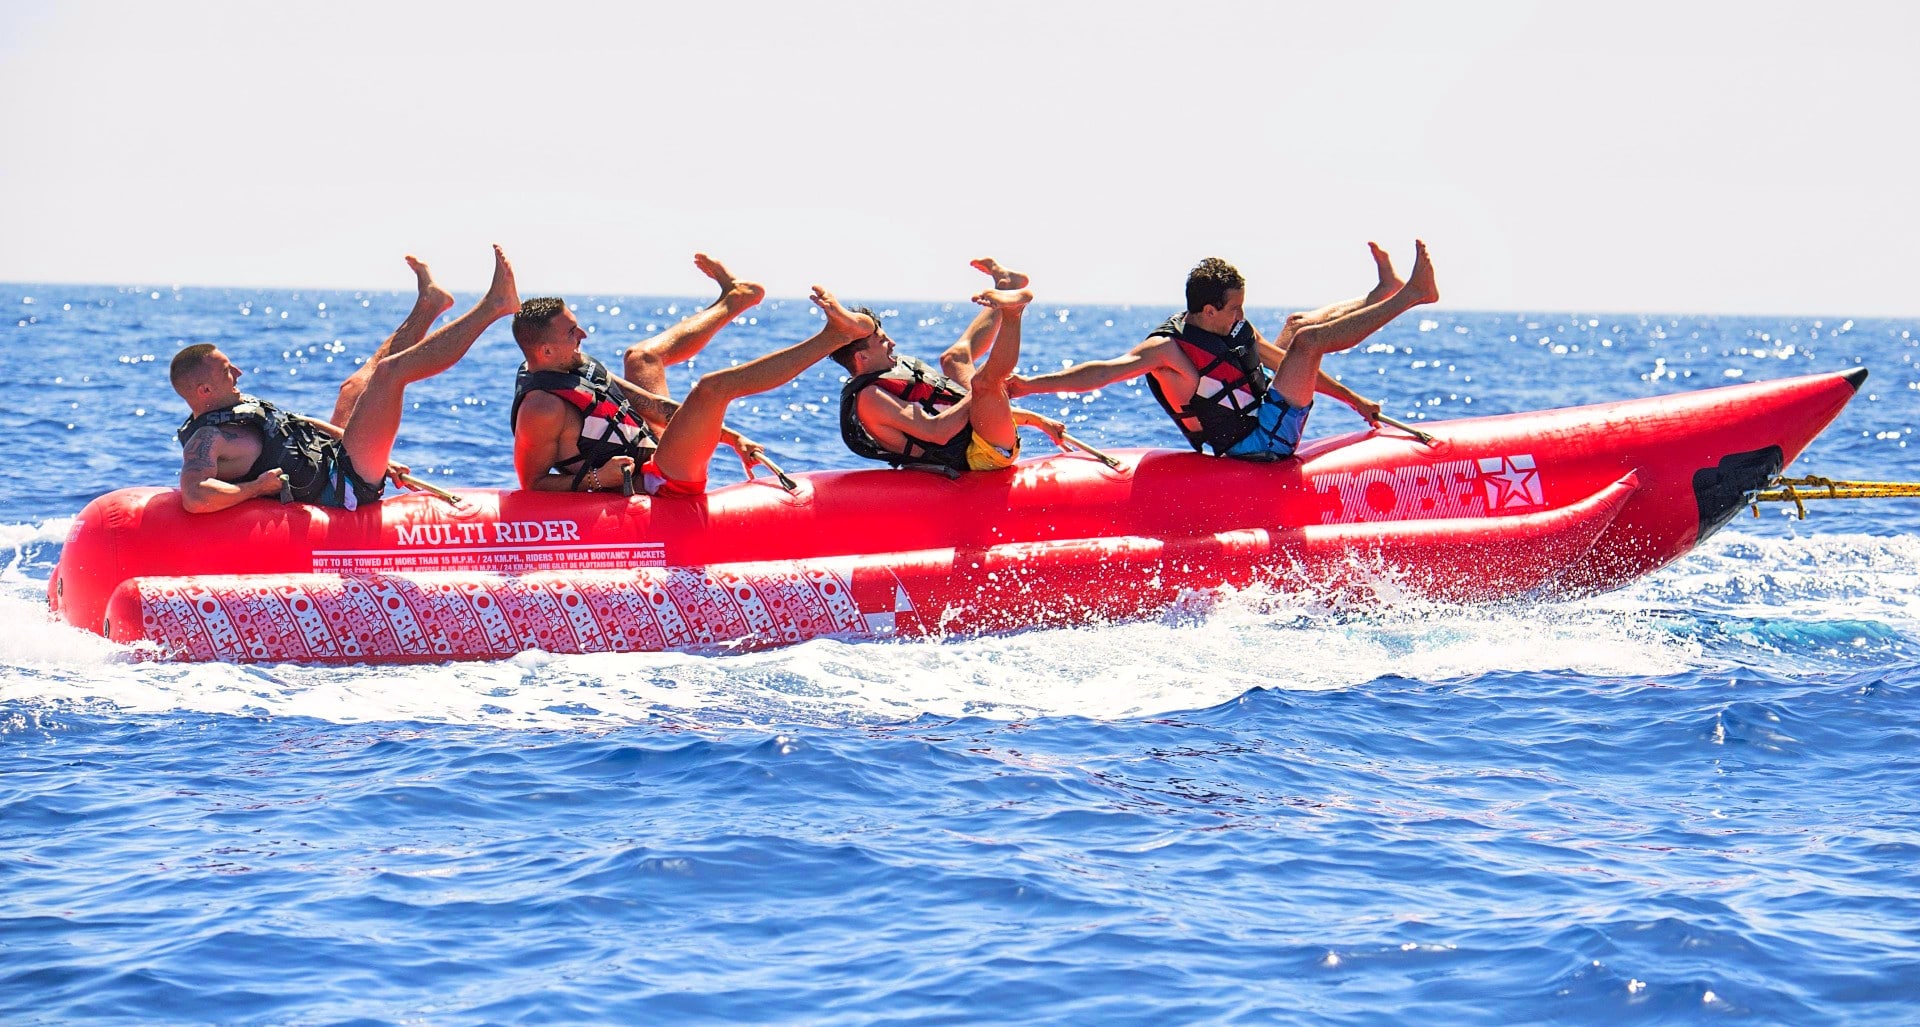 Four guys have fun on a banana boat in Malta.